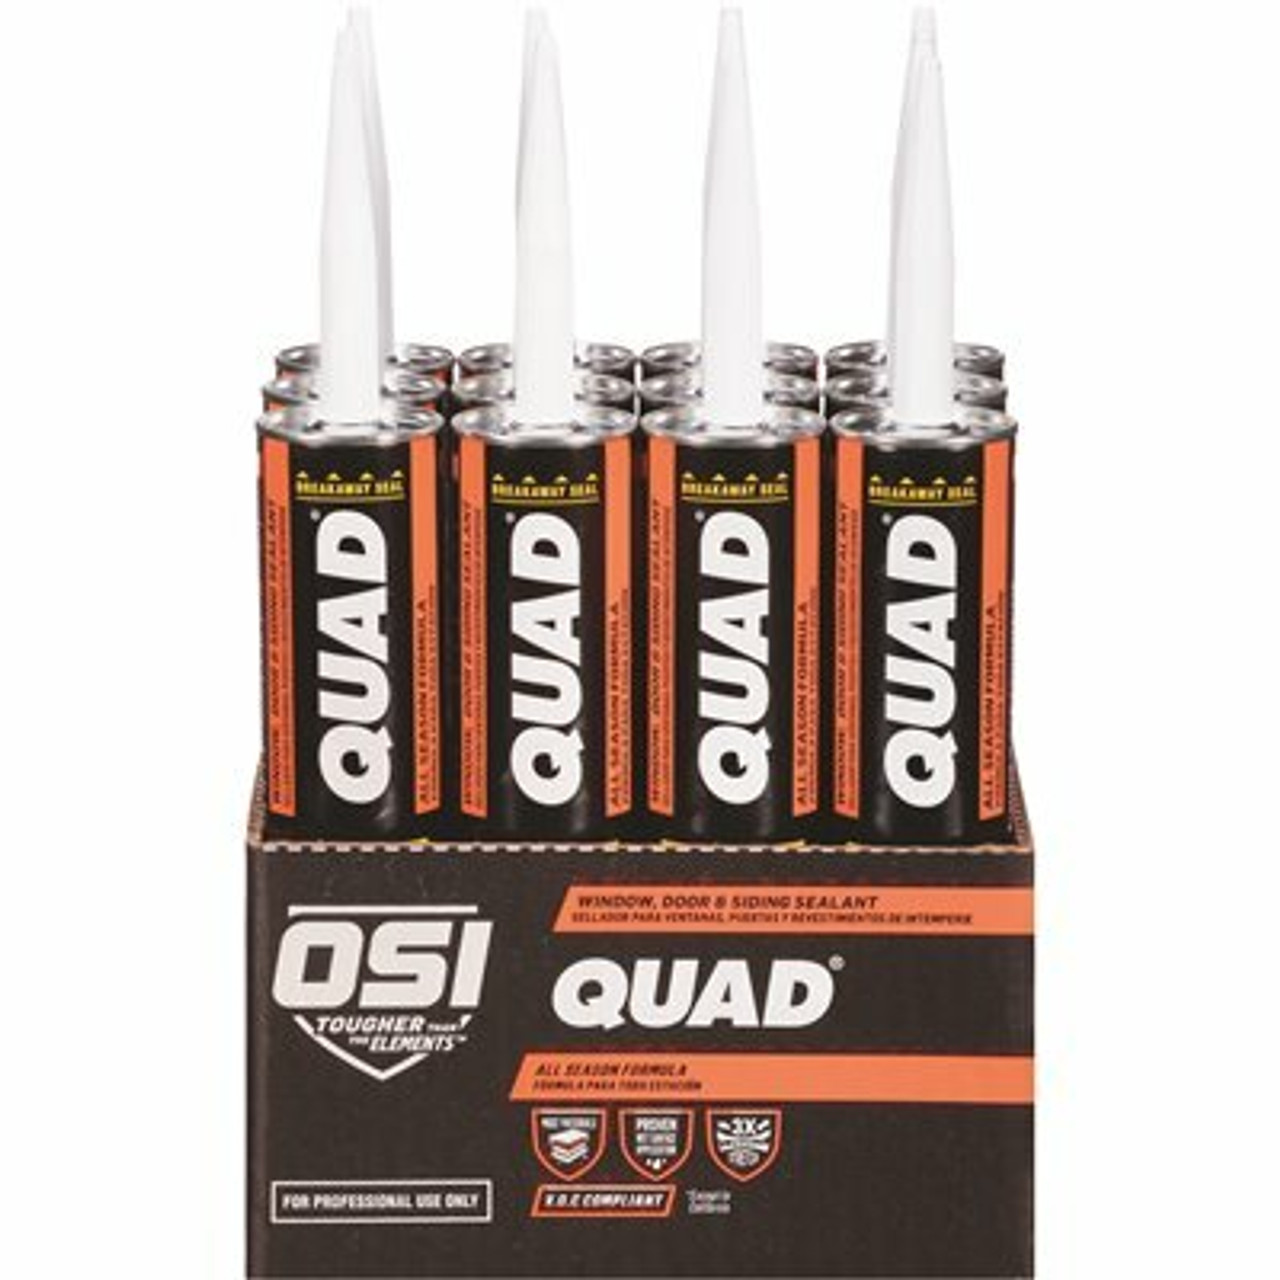 Osi Quad Advanced Formula 10 Fl. Oz. Gray #517 Exterior Window, Door, And Siding Sealant (12-Pack)